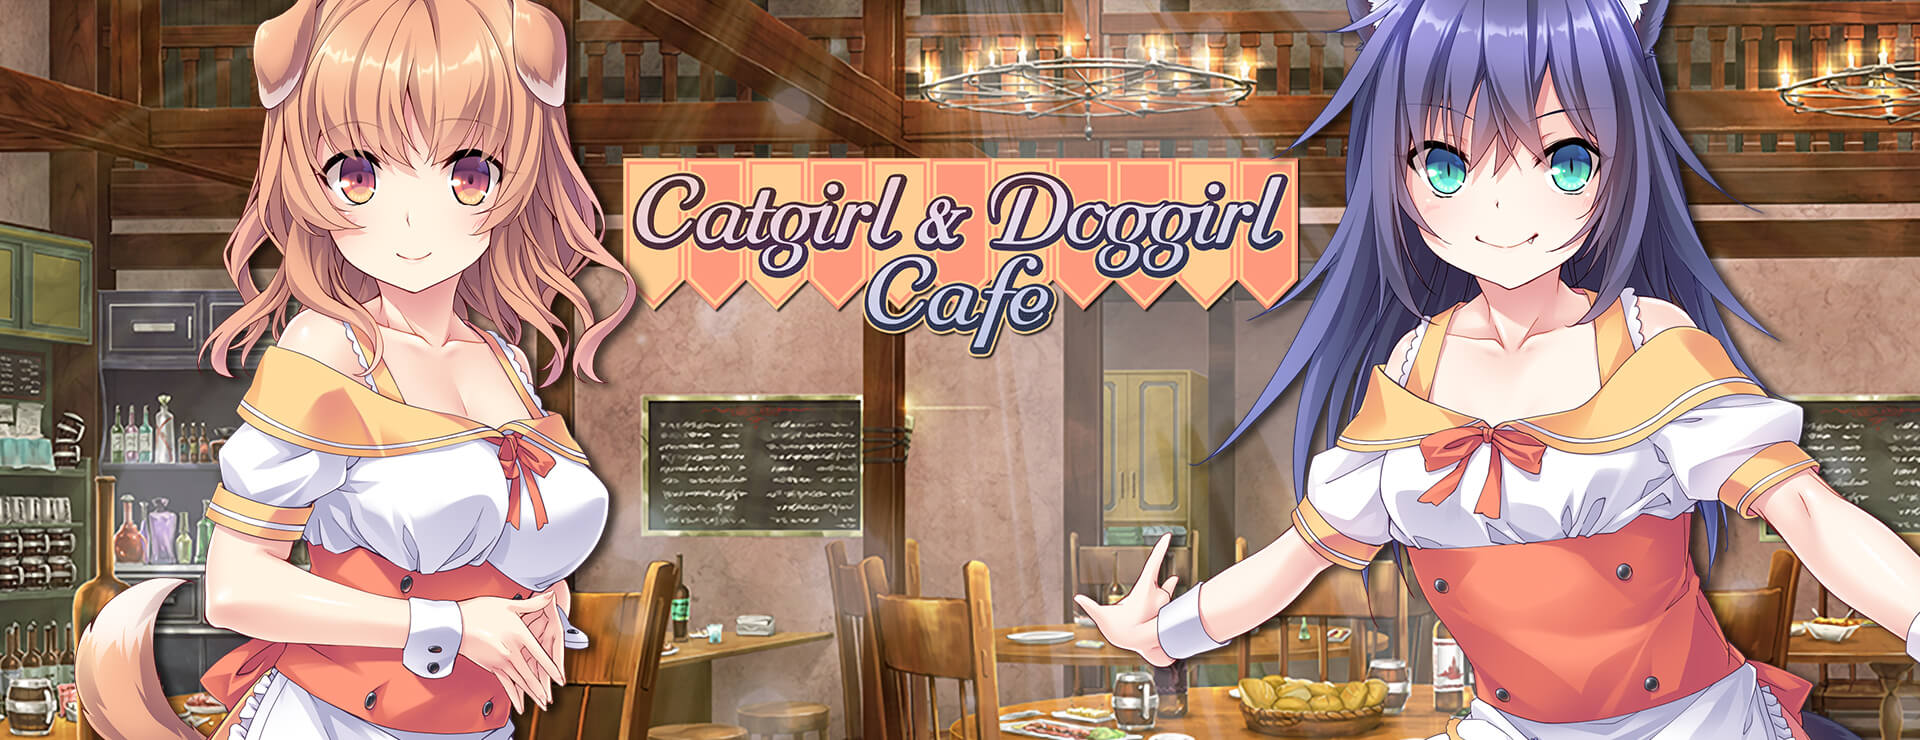 Catgirl and Doggirl Cafe - Japanisches Adventure Spiel